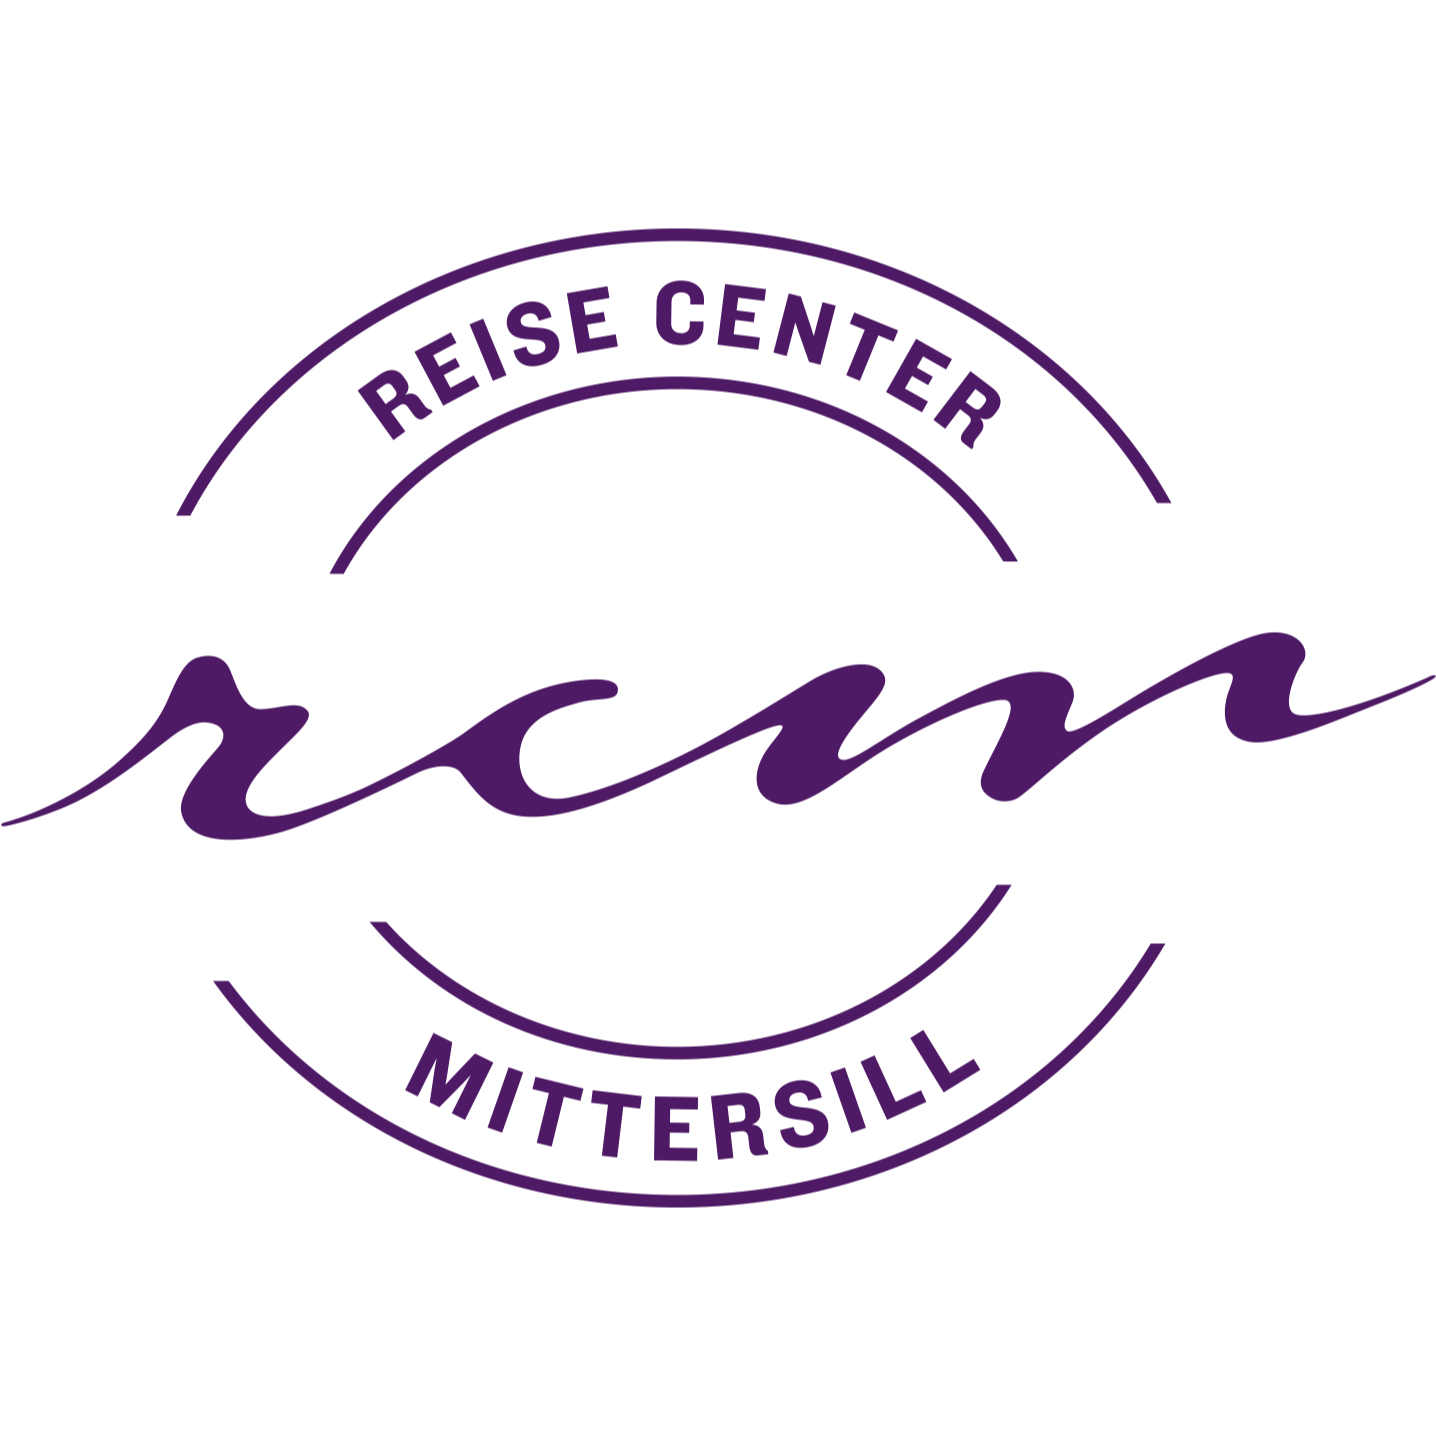 RCM - Reise Center Mittersill